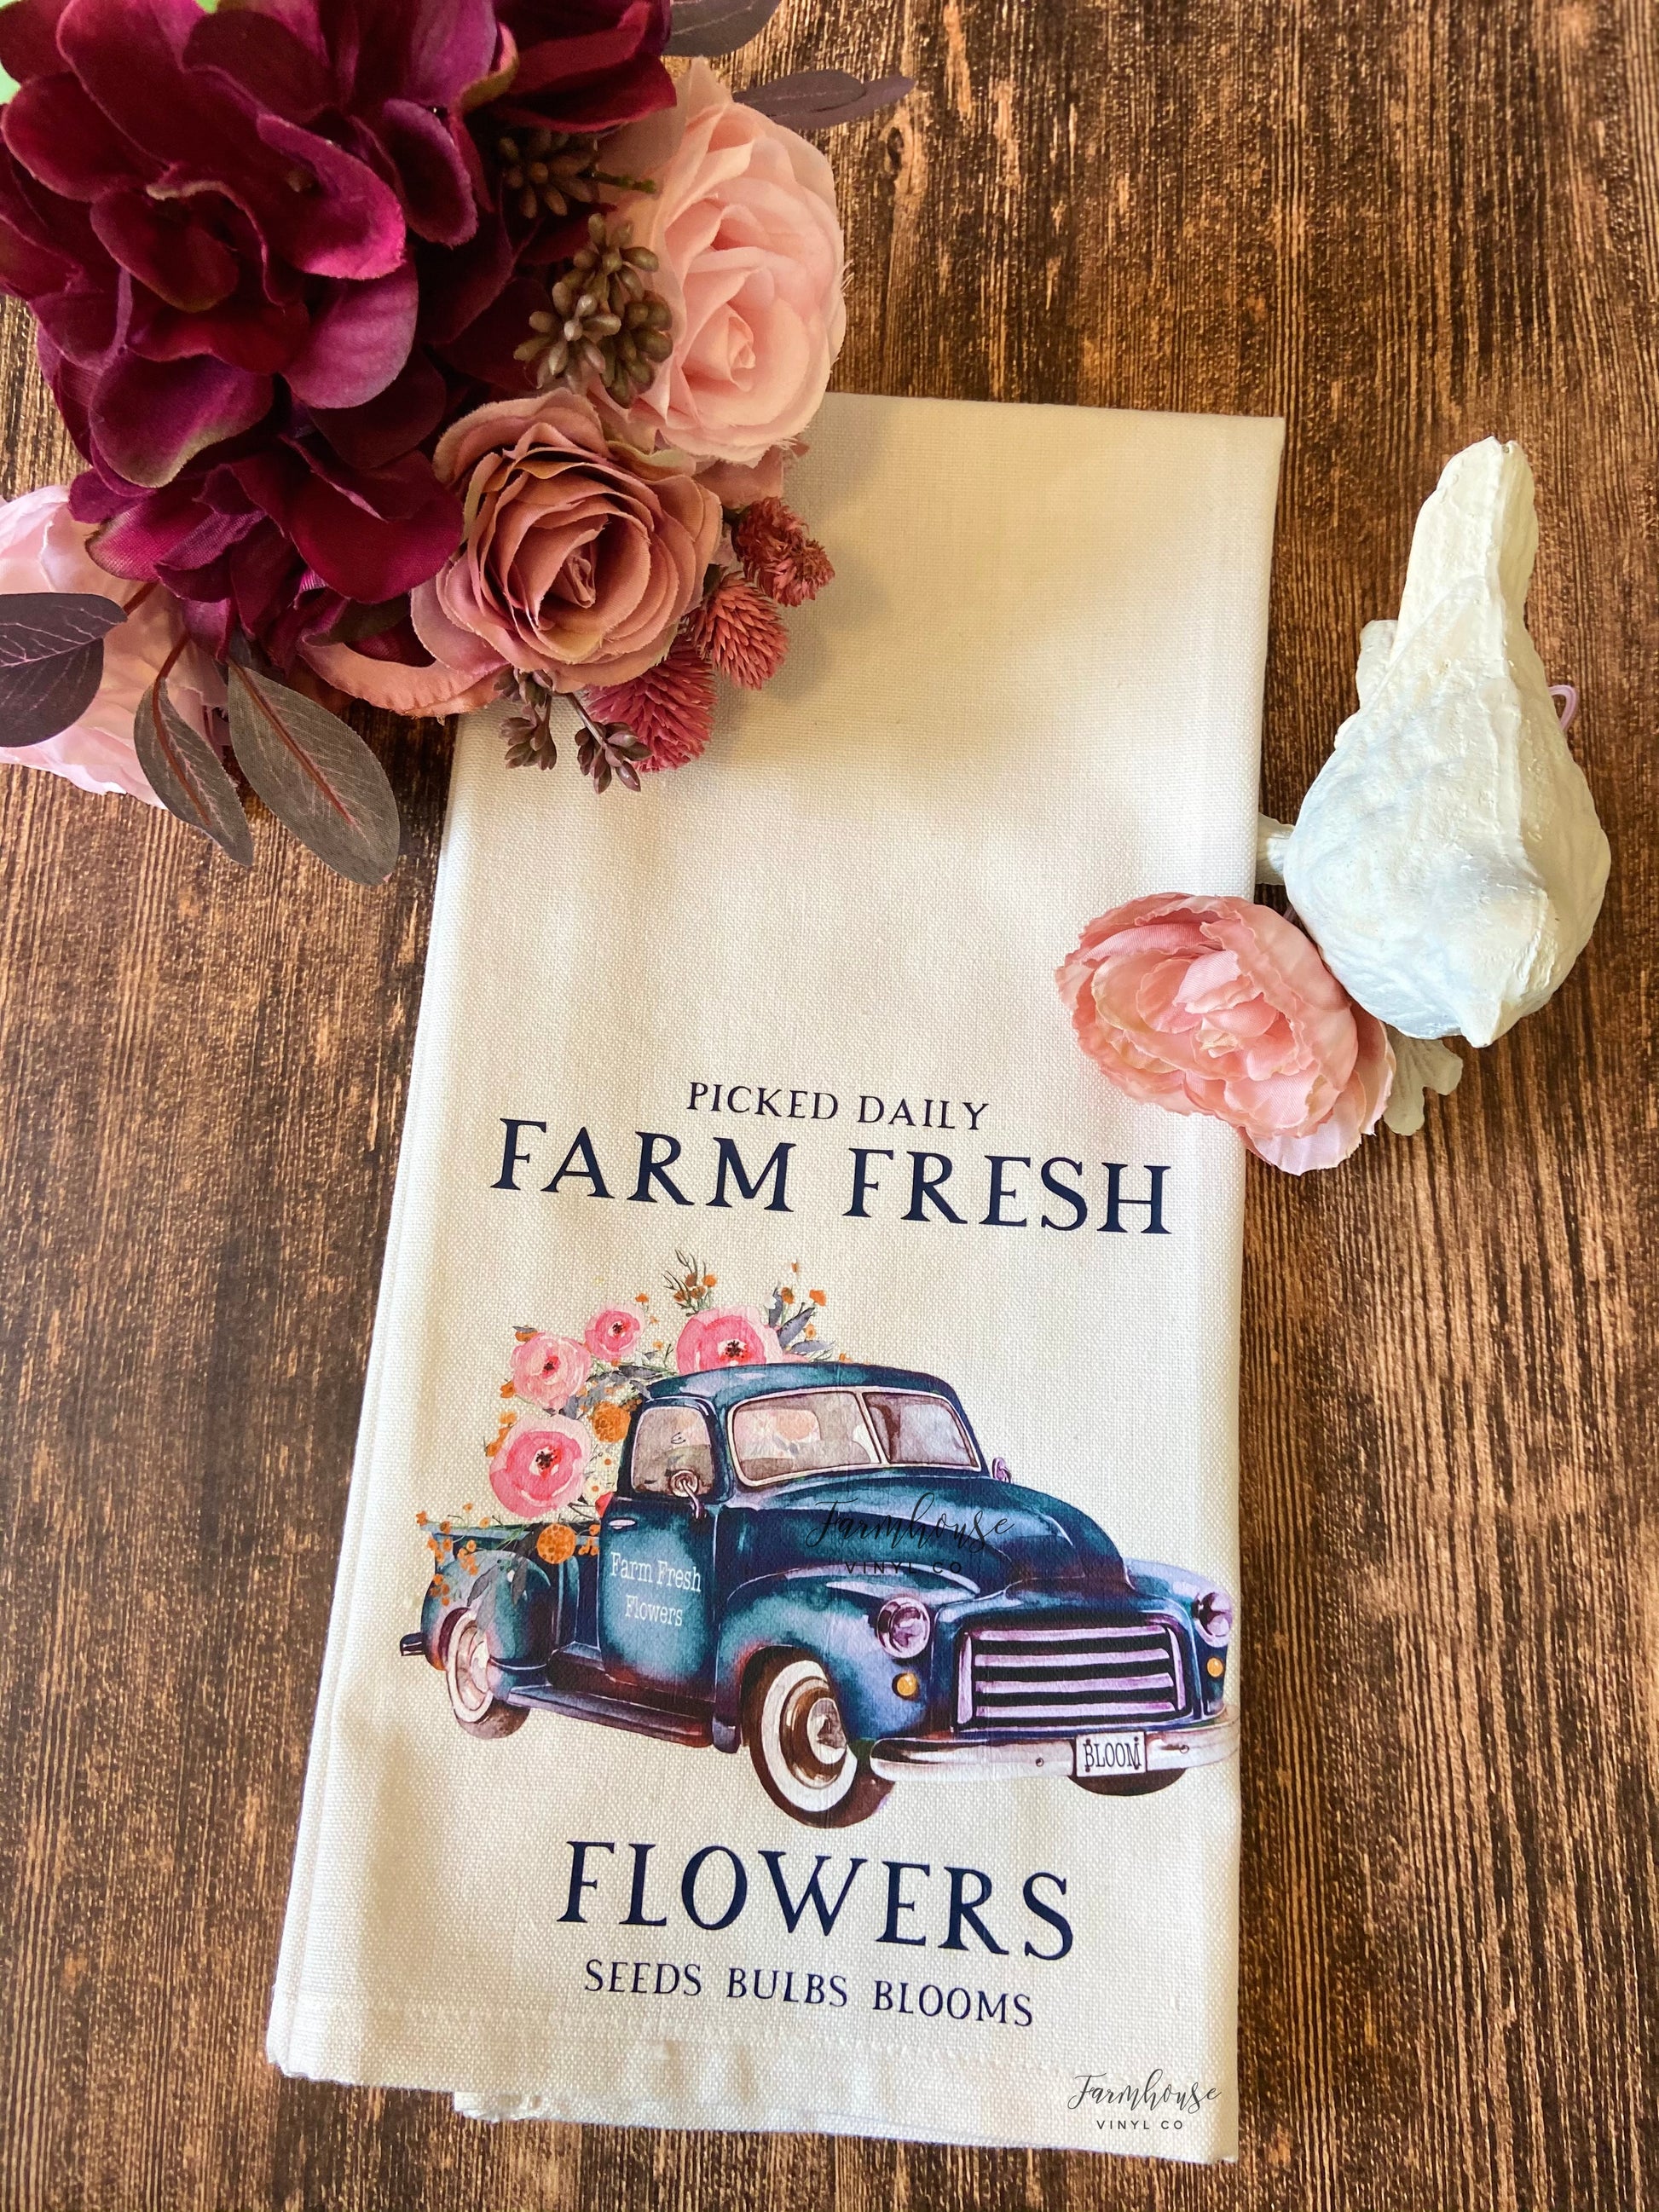 Farm Fresh Flowers Truck Towel - Farmhouse Vinyl Co